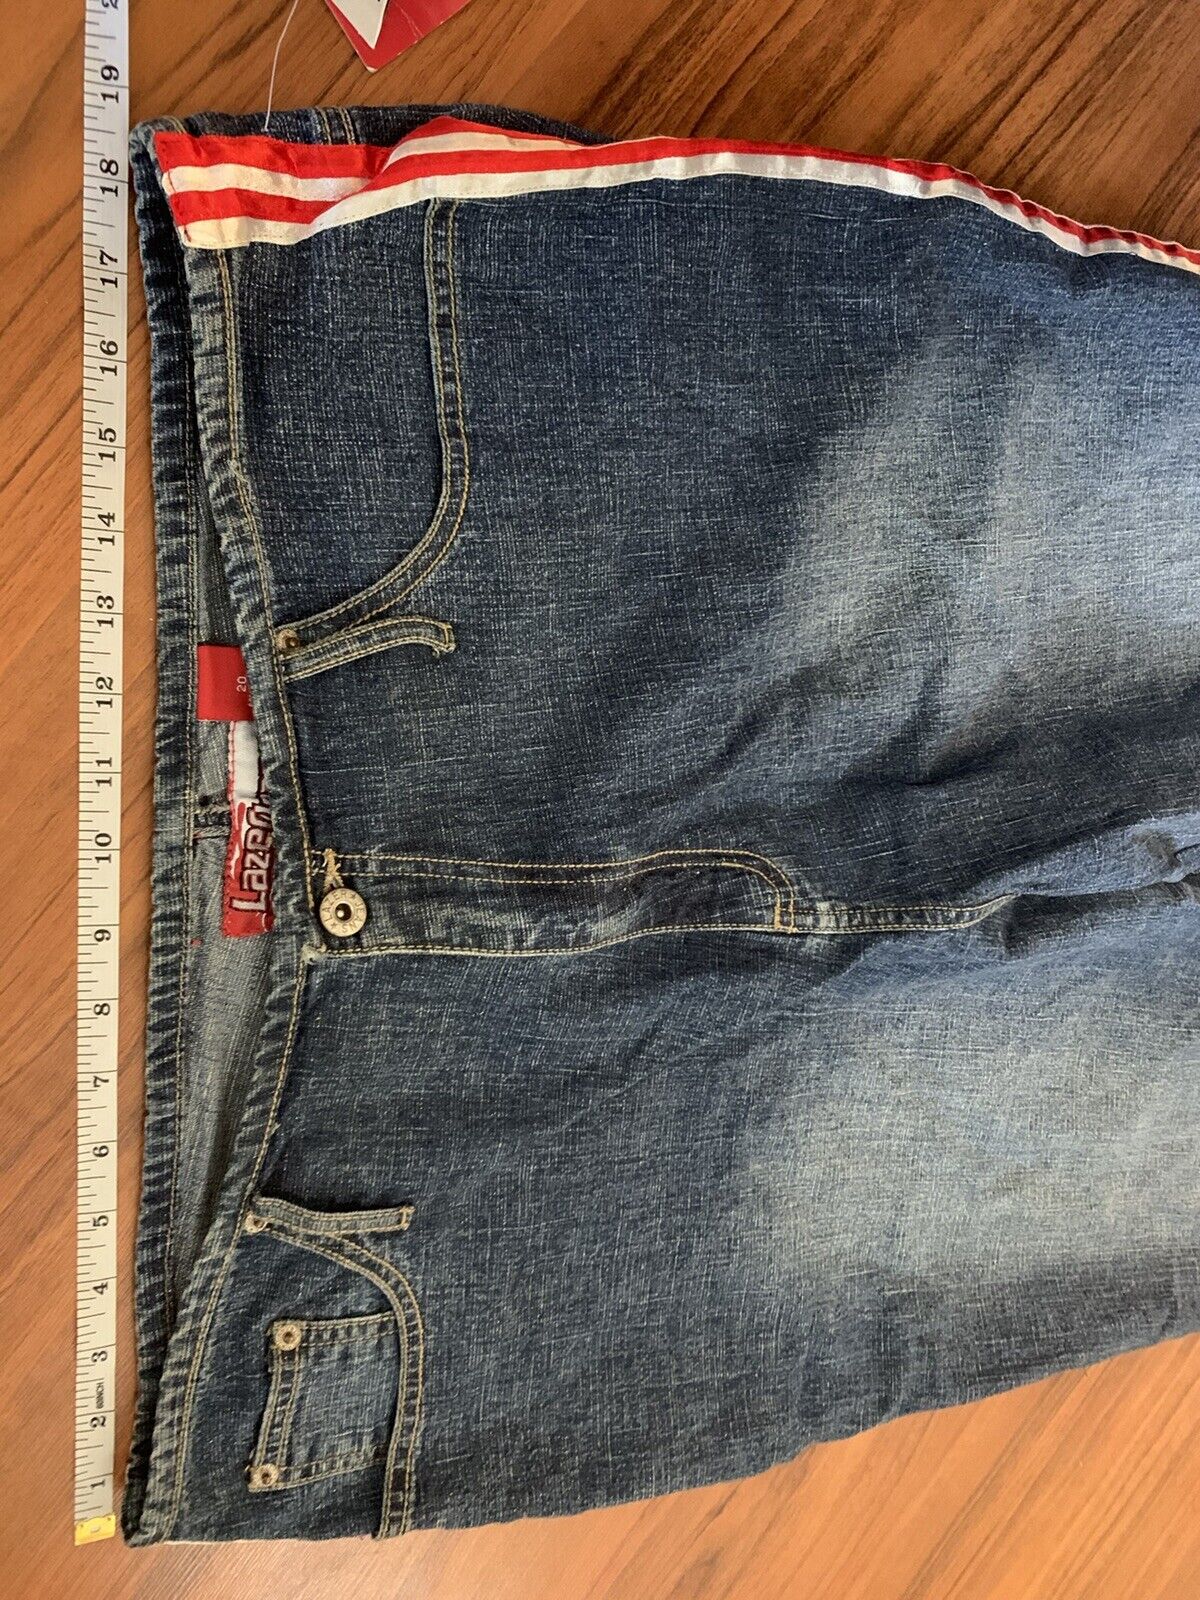 Lazer Jeans Stripe Stretch Denim Jeans 90s Vintage Size 20 A31